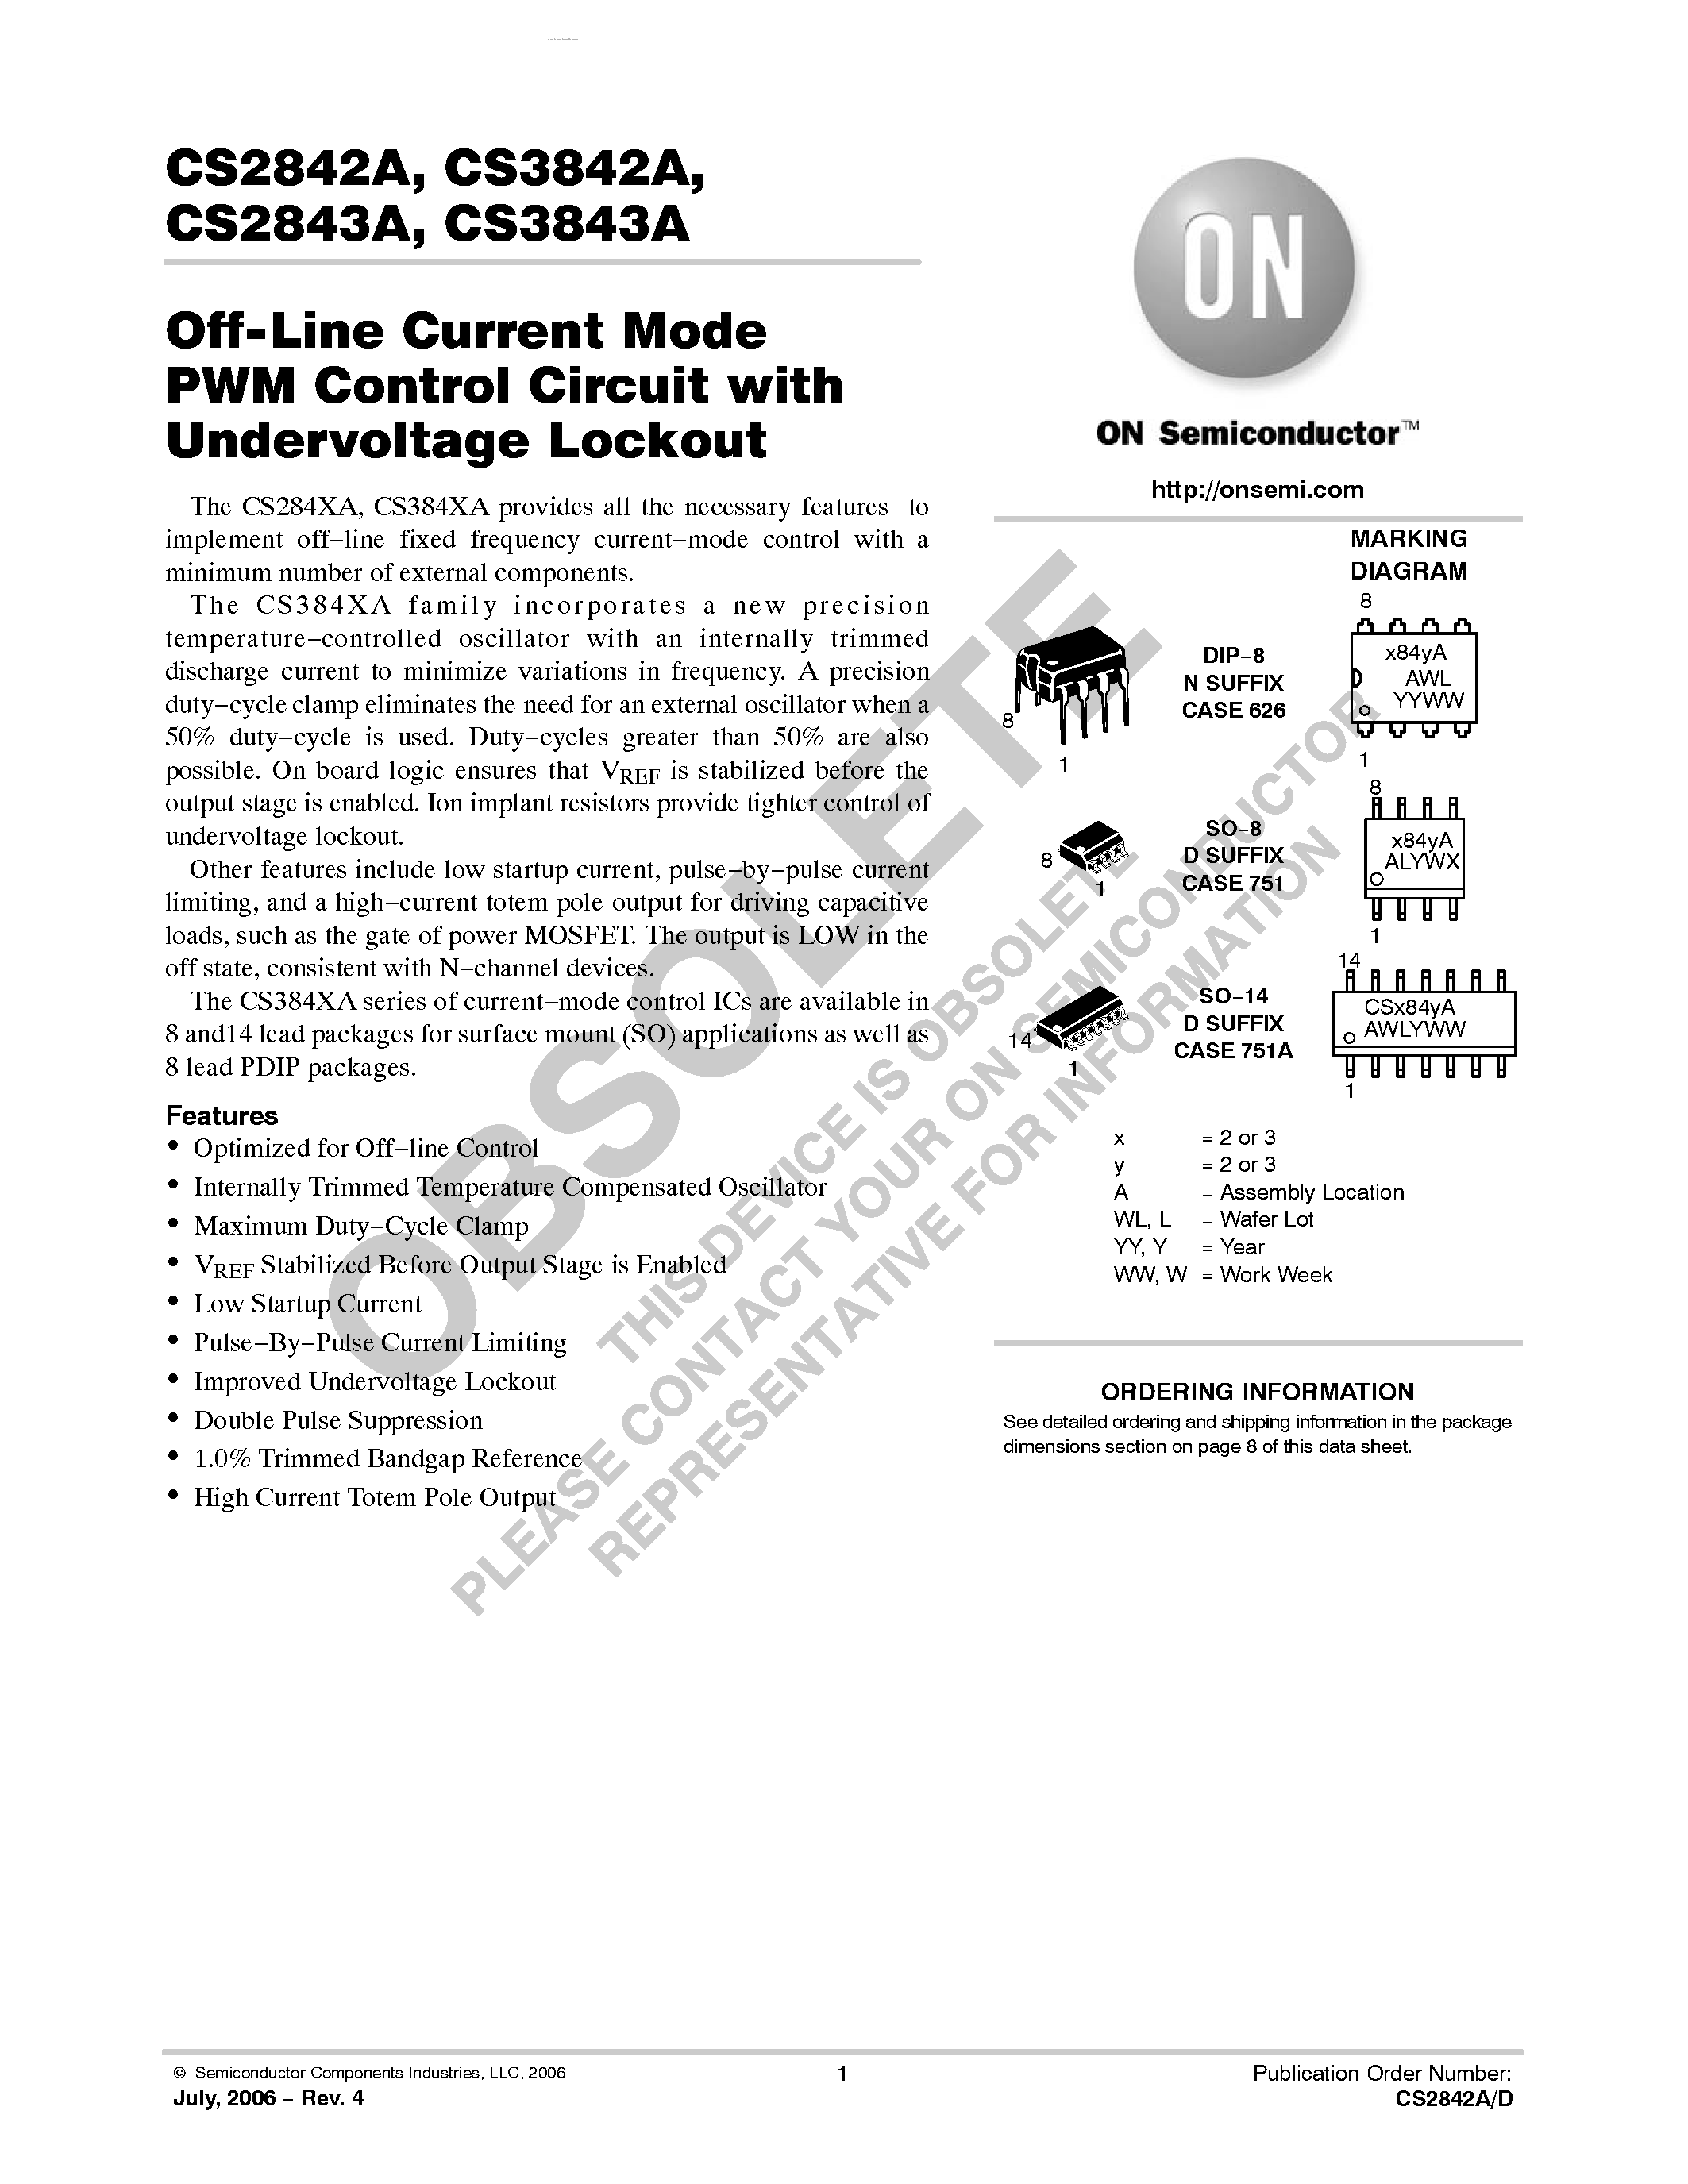 Datasheet CS2842A - (CS2842A / CS2843A) Off-Line Current Mode PWM Control Circuit page 1